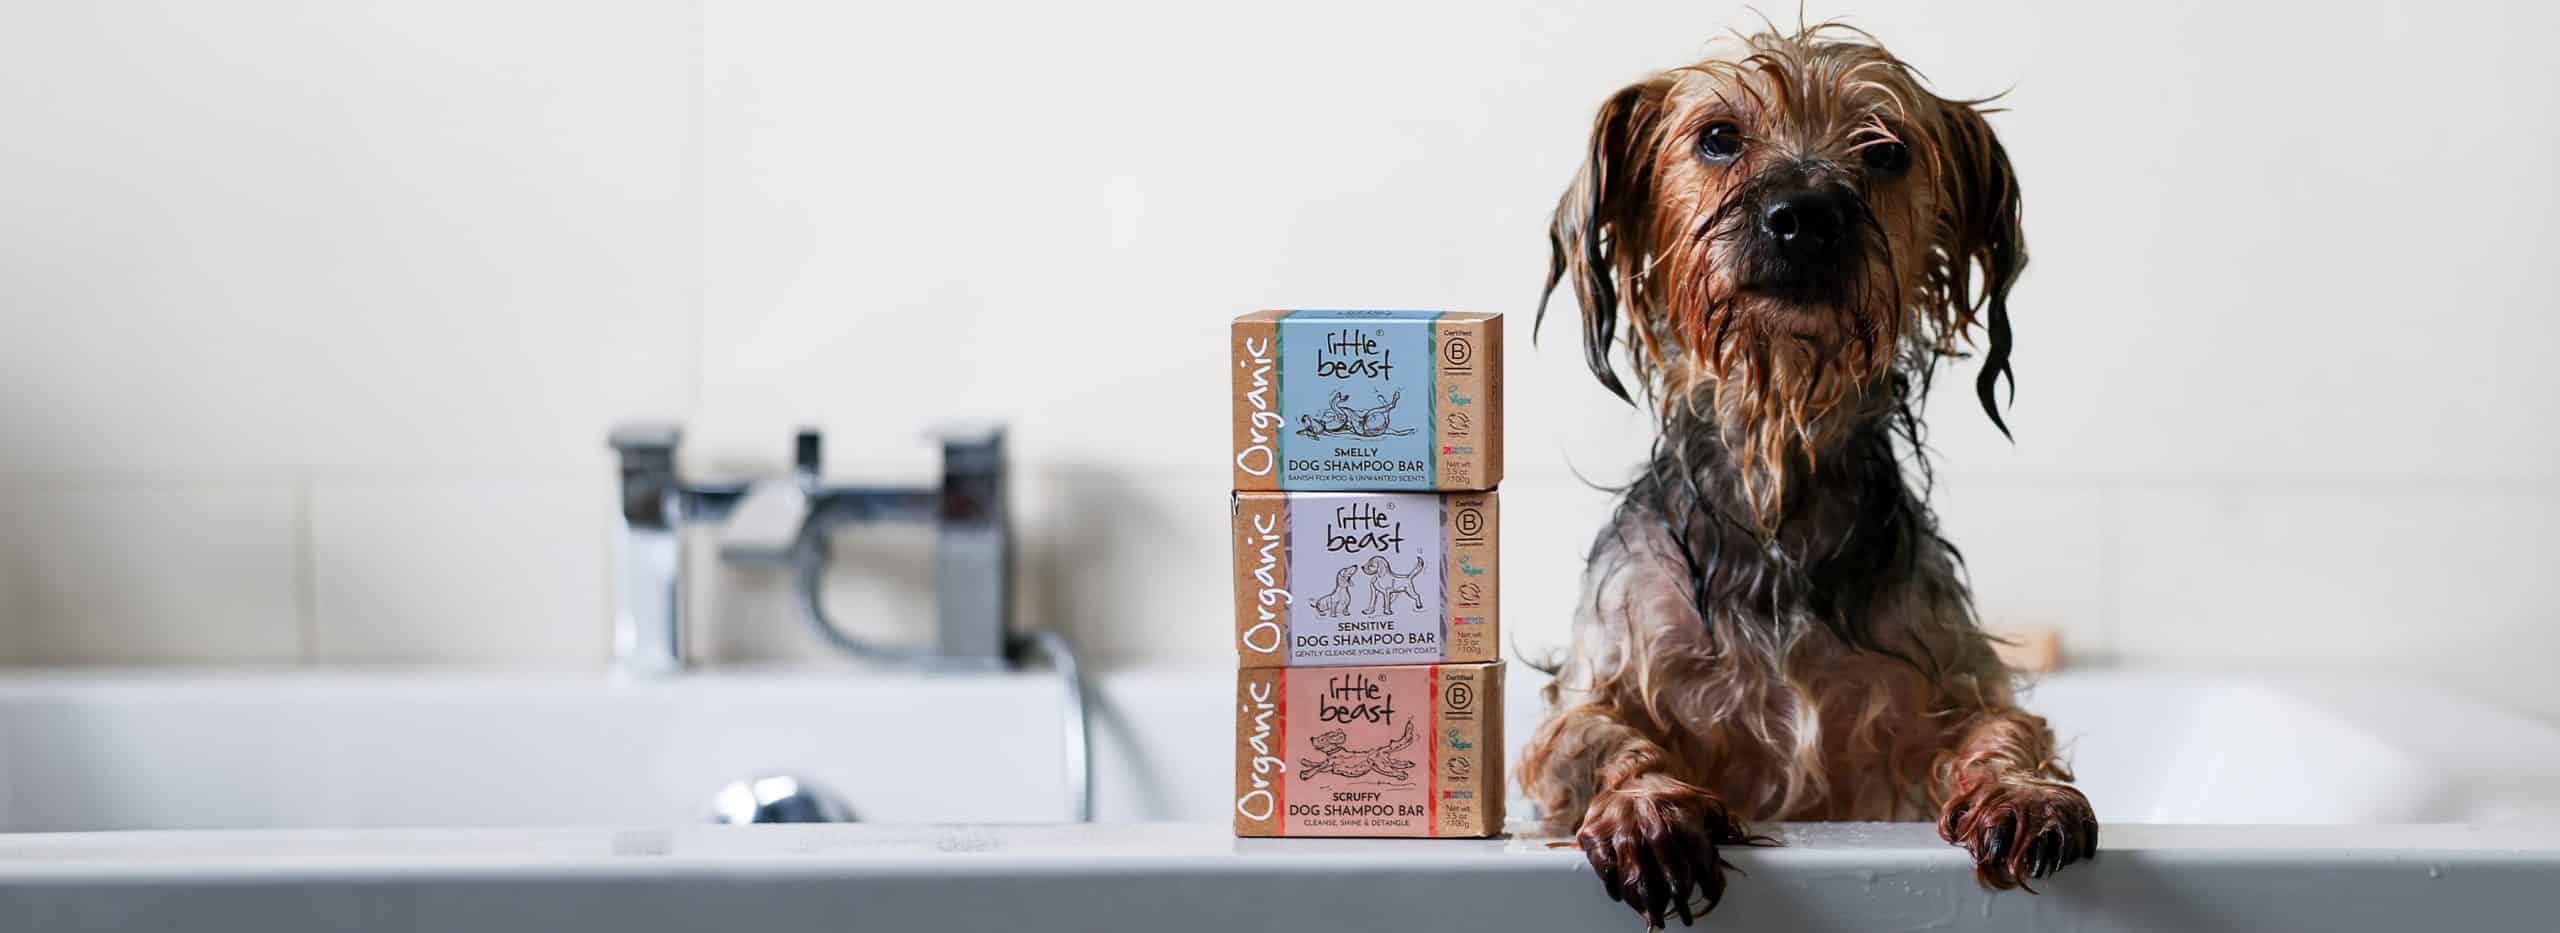 Scruffy wet dog with 3 Dog Shampoo Bars. Little Beast Sensitive, Scruffy & Smelly Shampoo Bars.